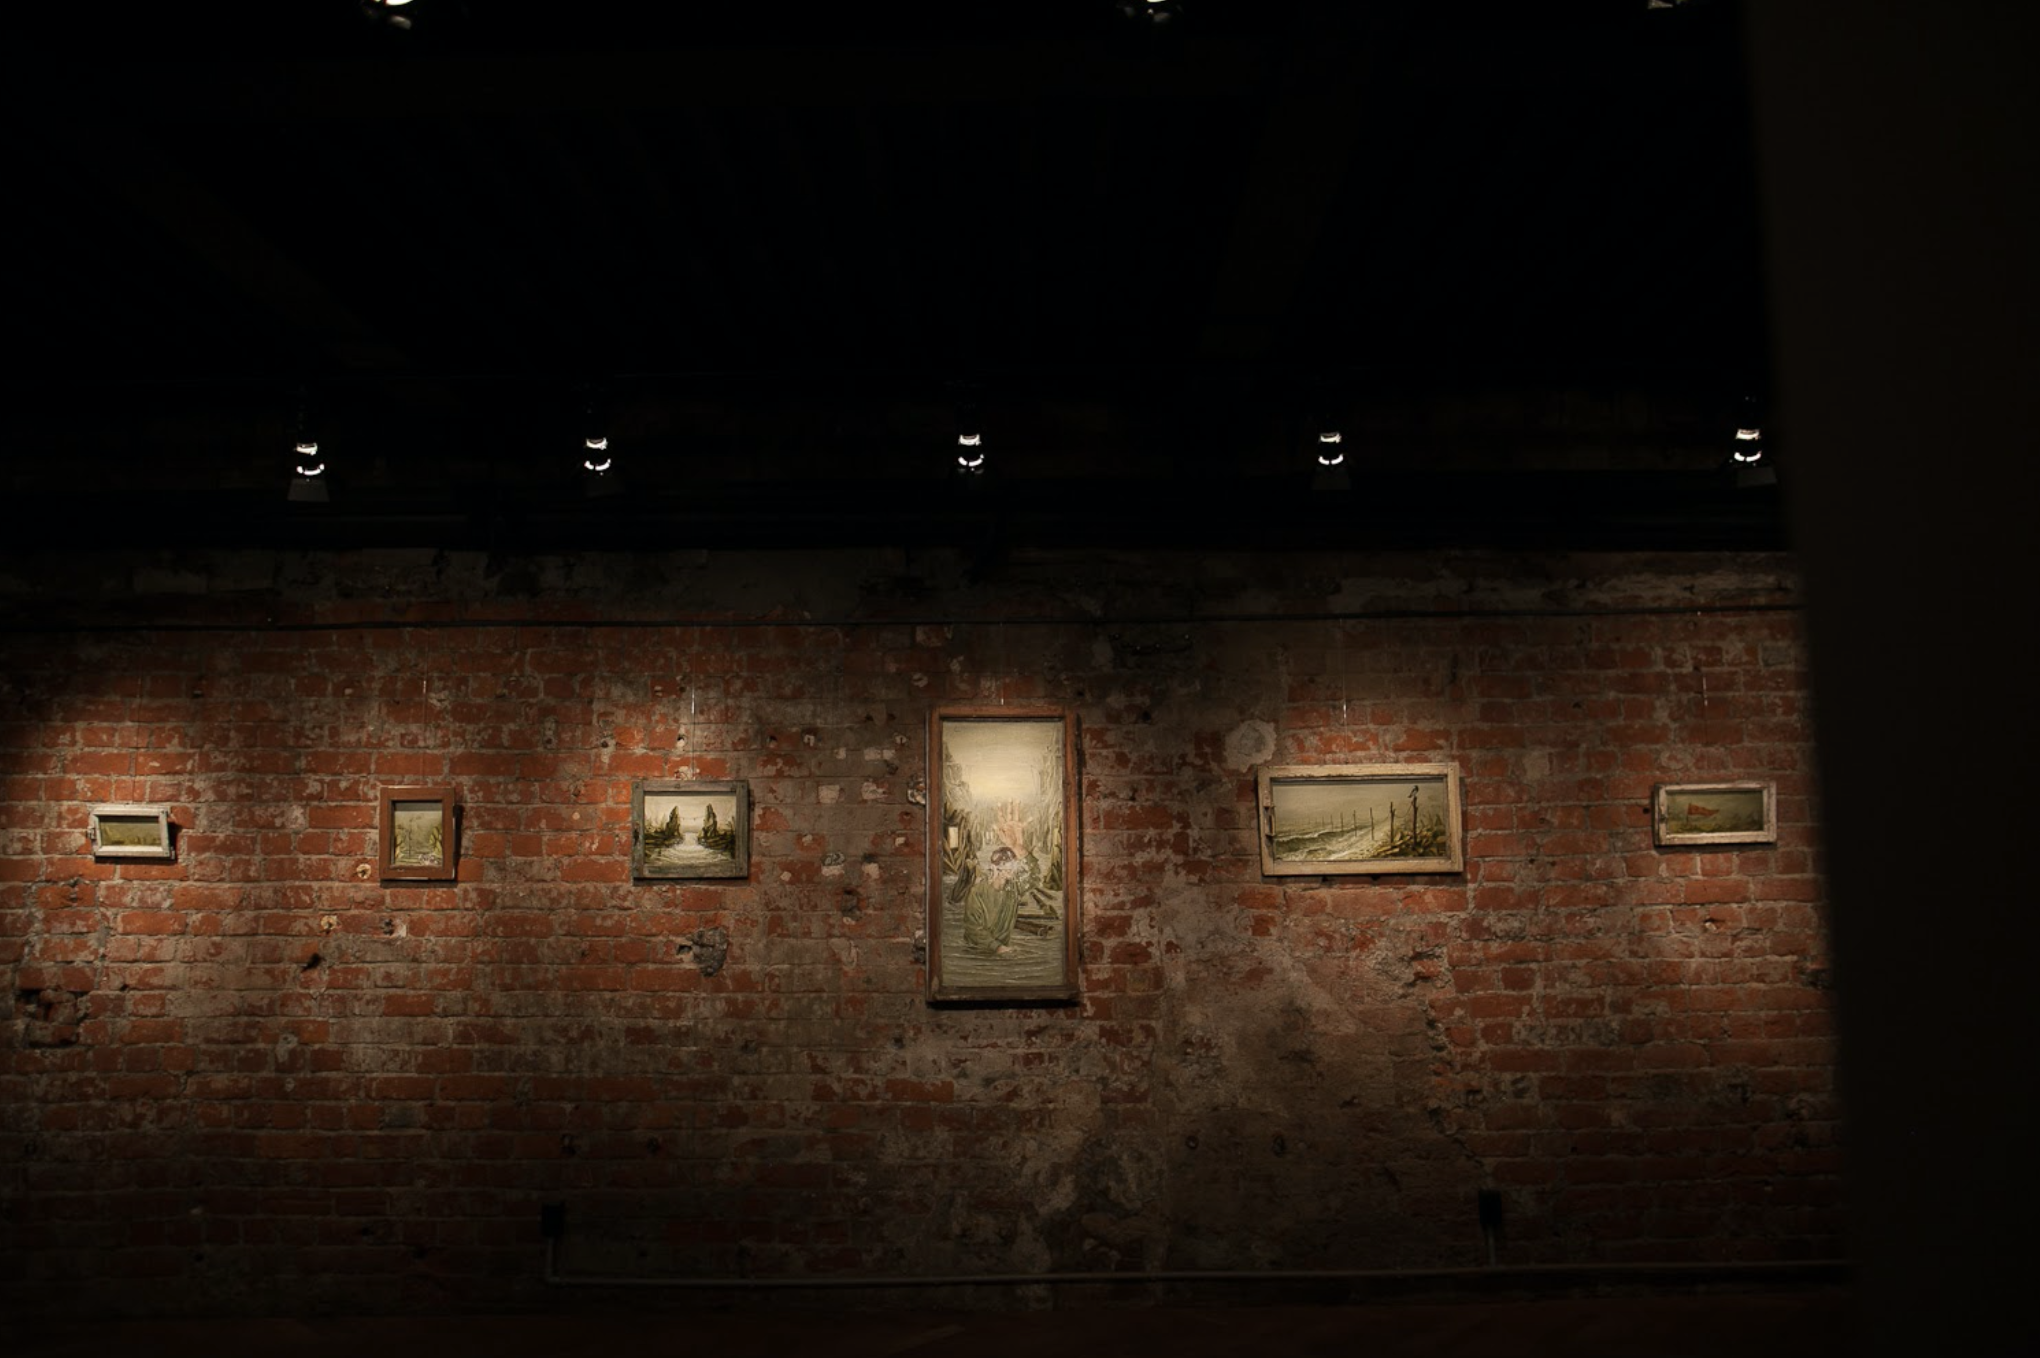 Exhibition of Andrey Olenev "Windows"